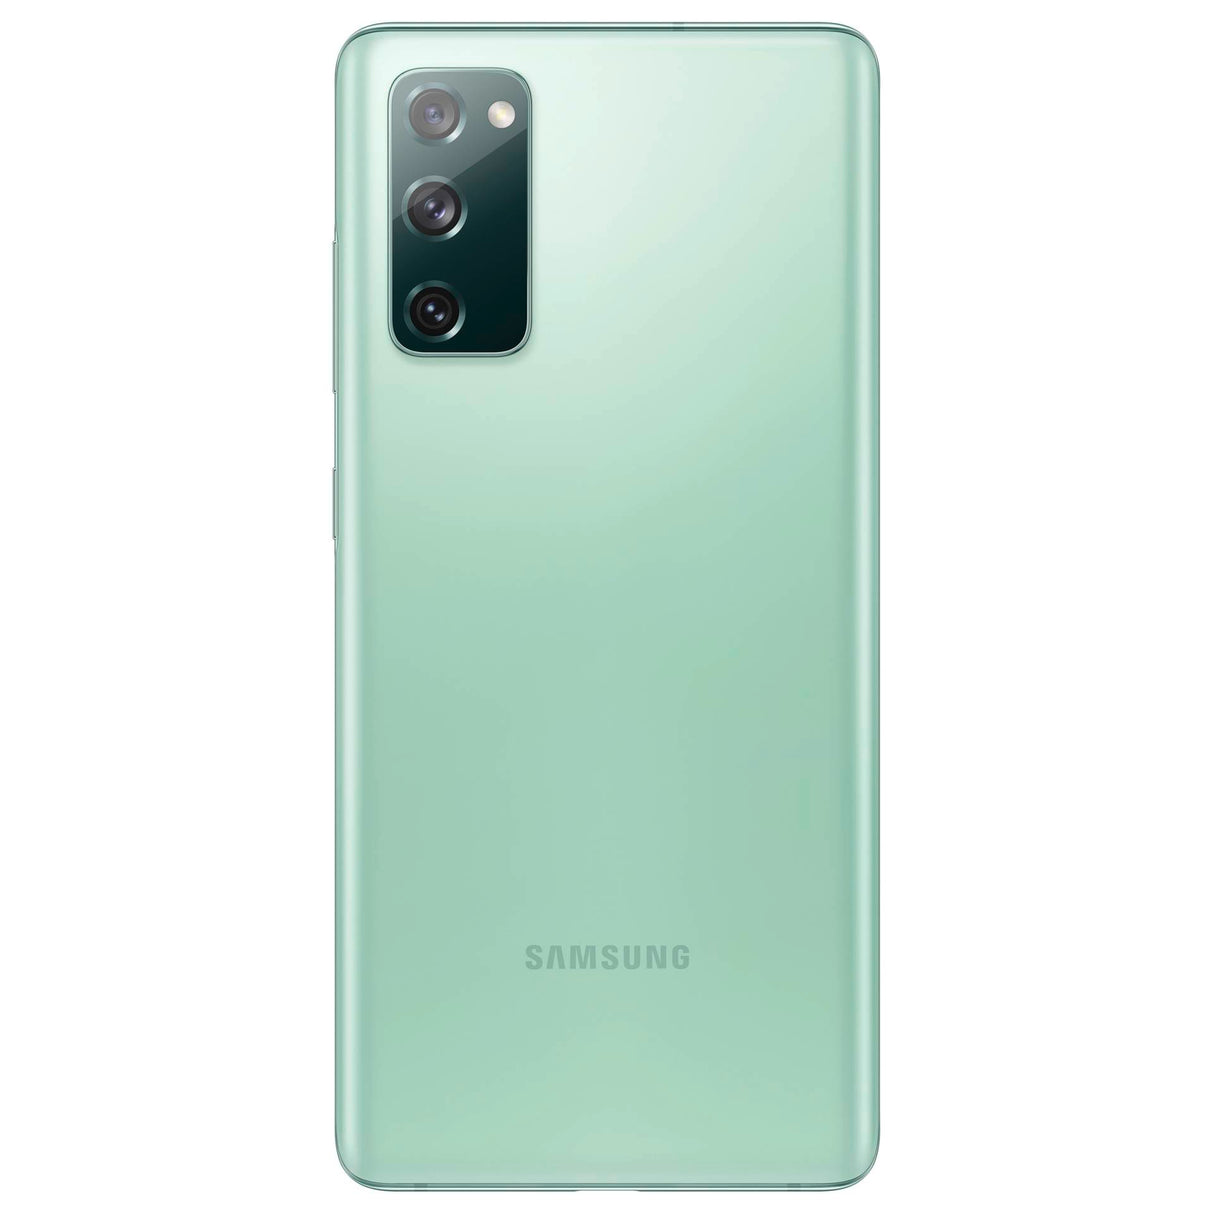 Samsung Galaxy S20 FE Cloud Mint Green 128GB - Grado A